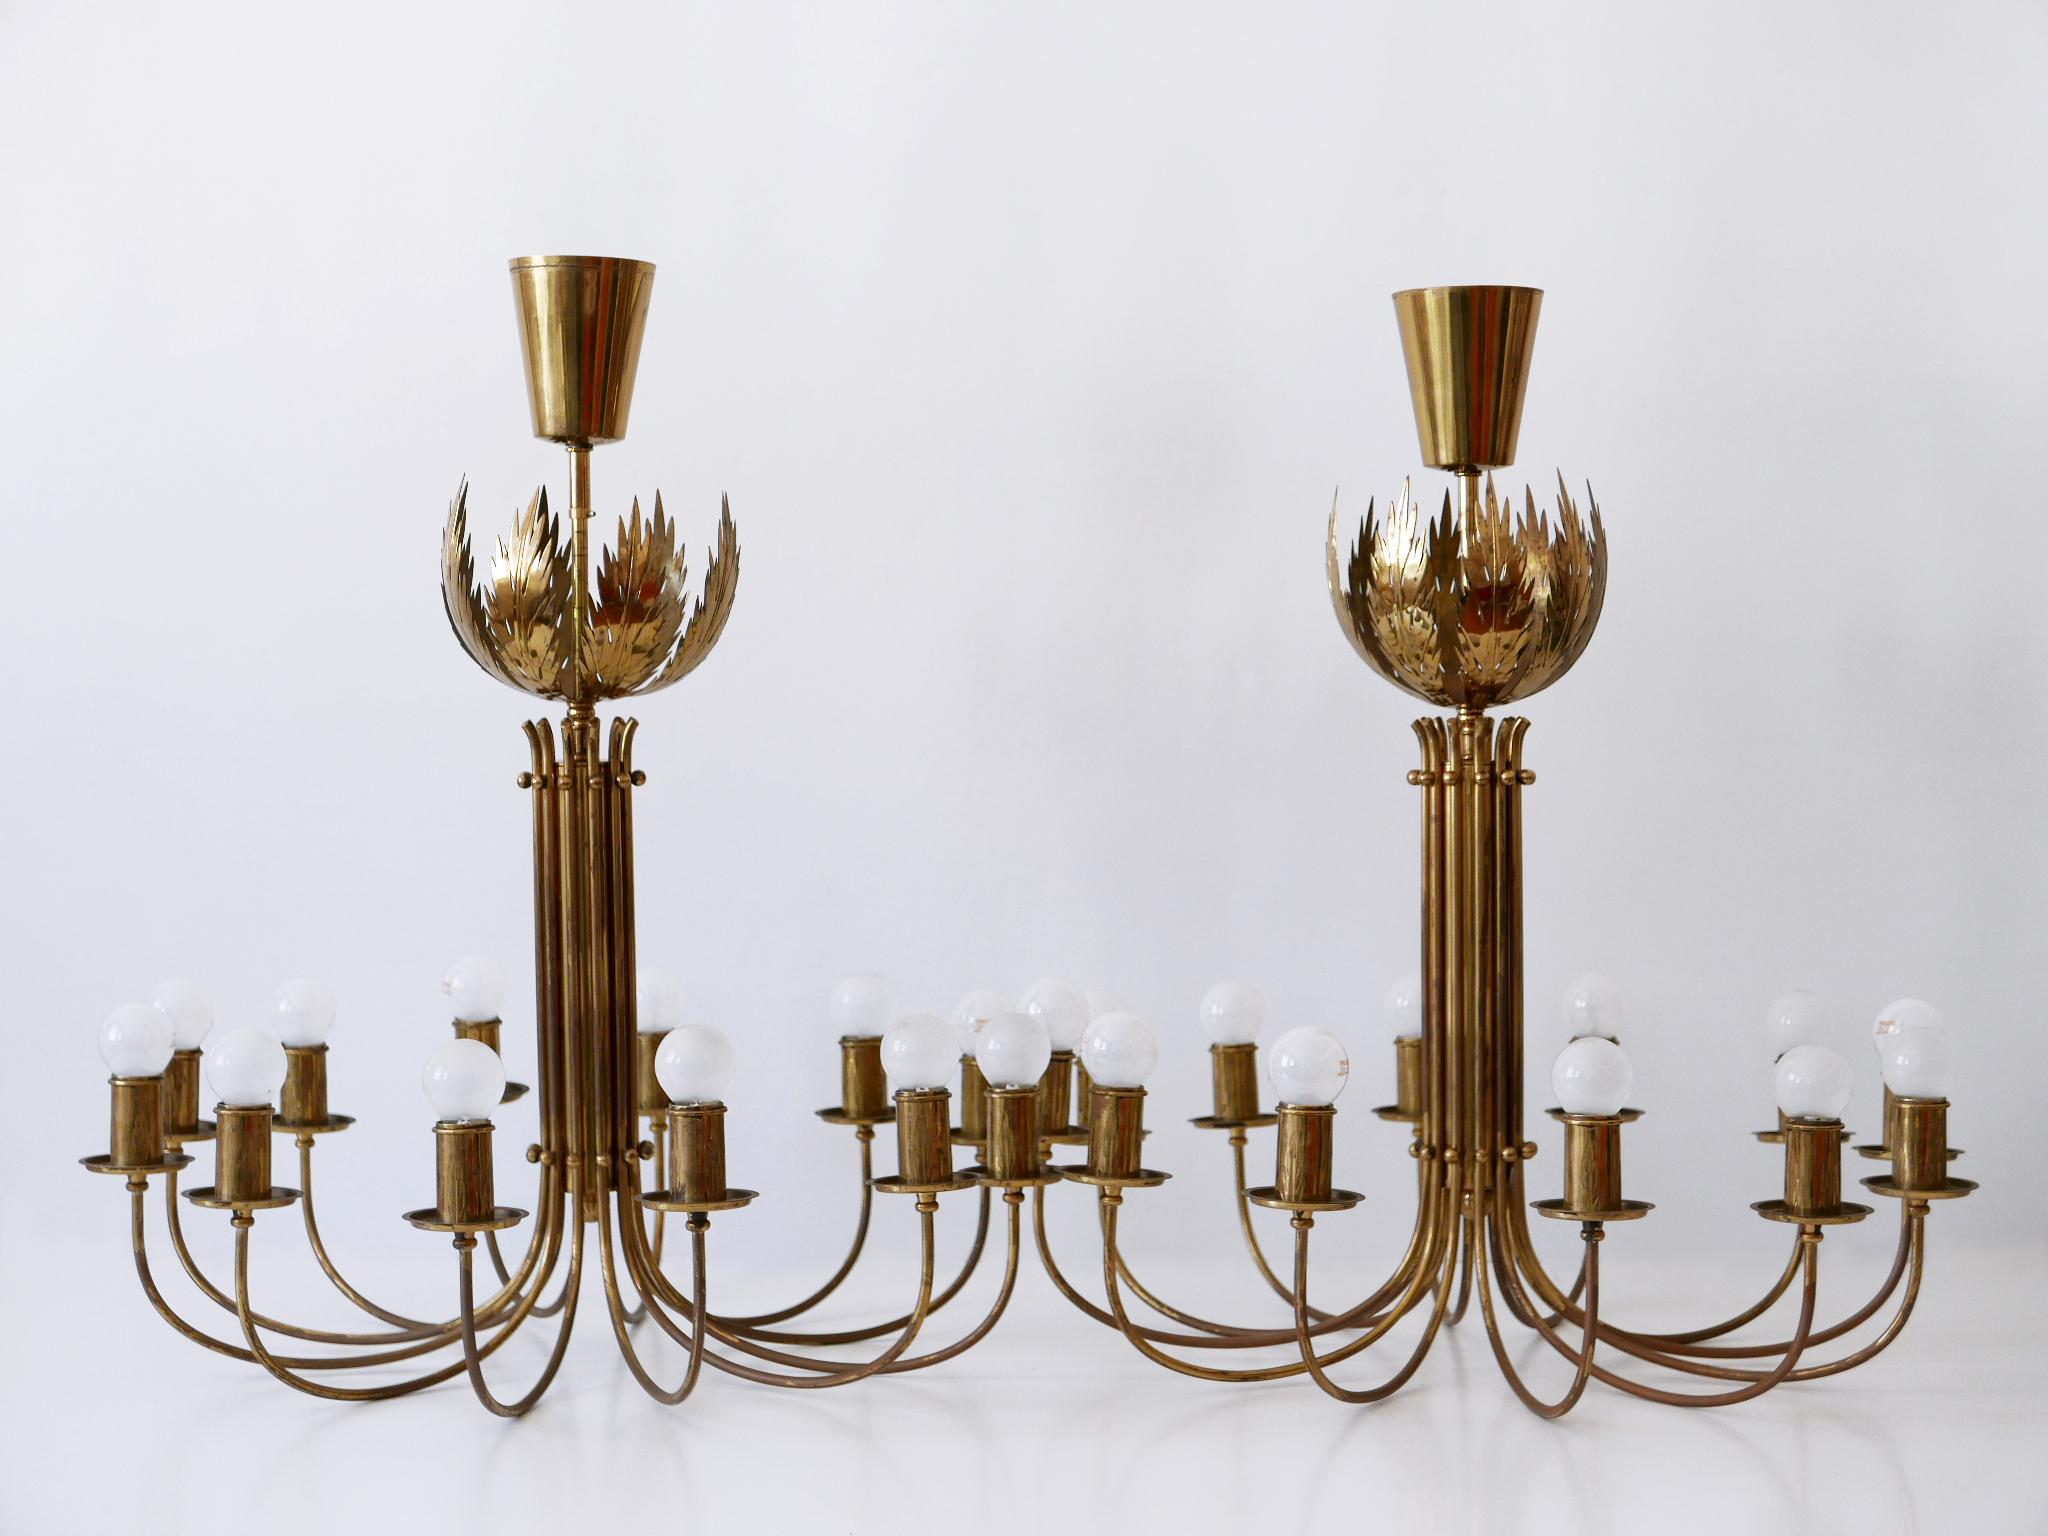 Rare 12-Armed Brass Chandeliers or Pendant Lamps by Vereinigte Werkstätten 1950s For Sale 3